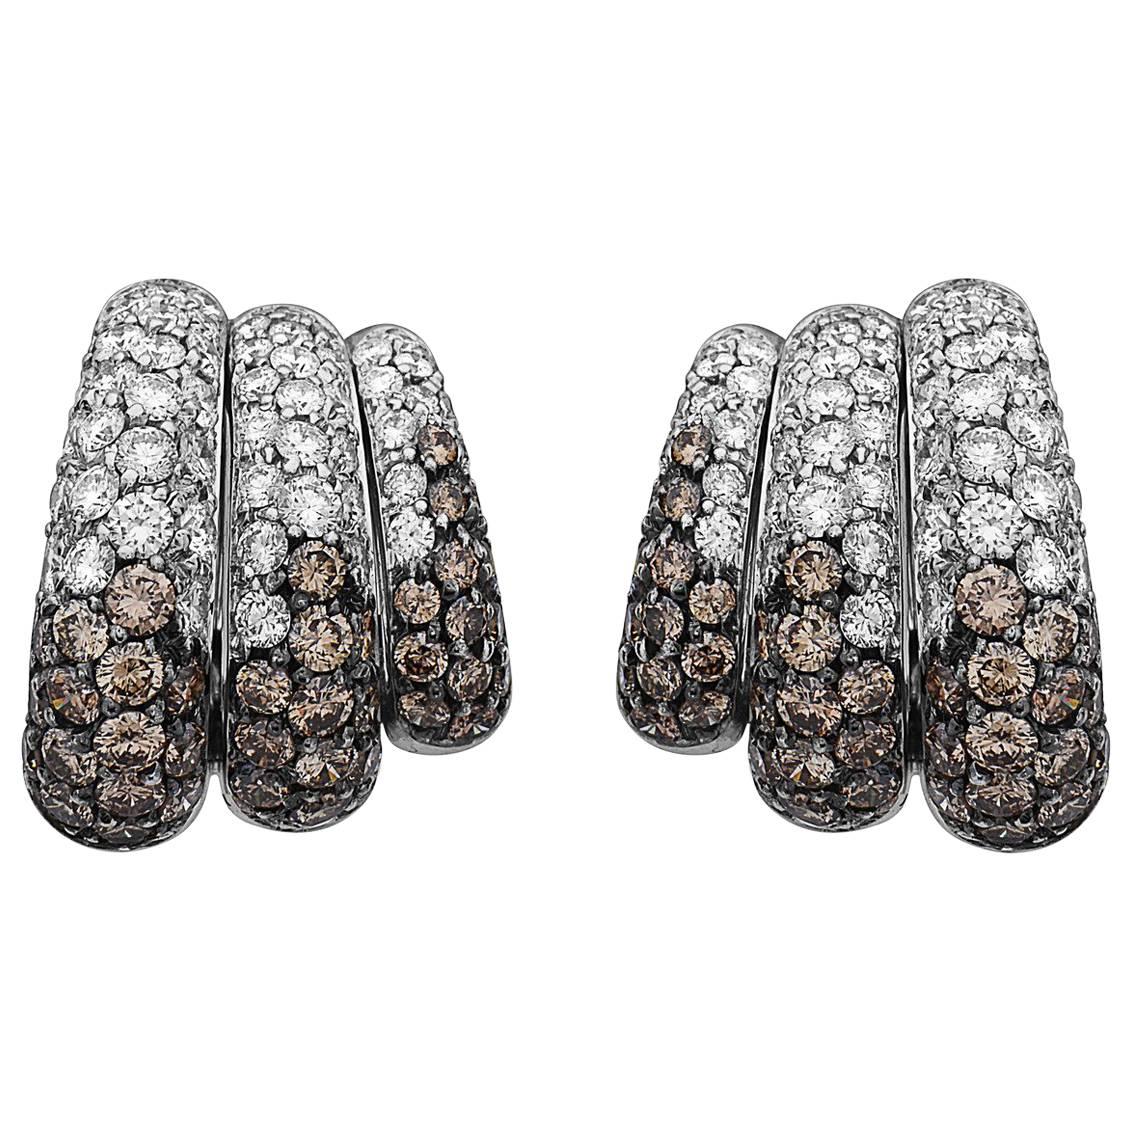 Emilio Jewelry 7.46 Carat Unique Diamond Earrings